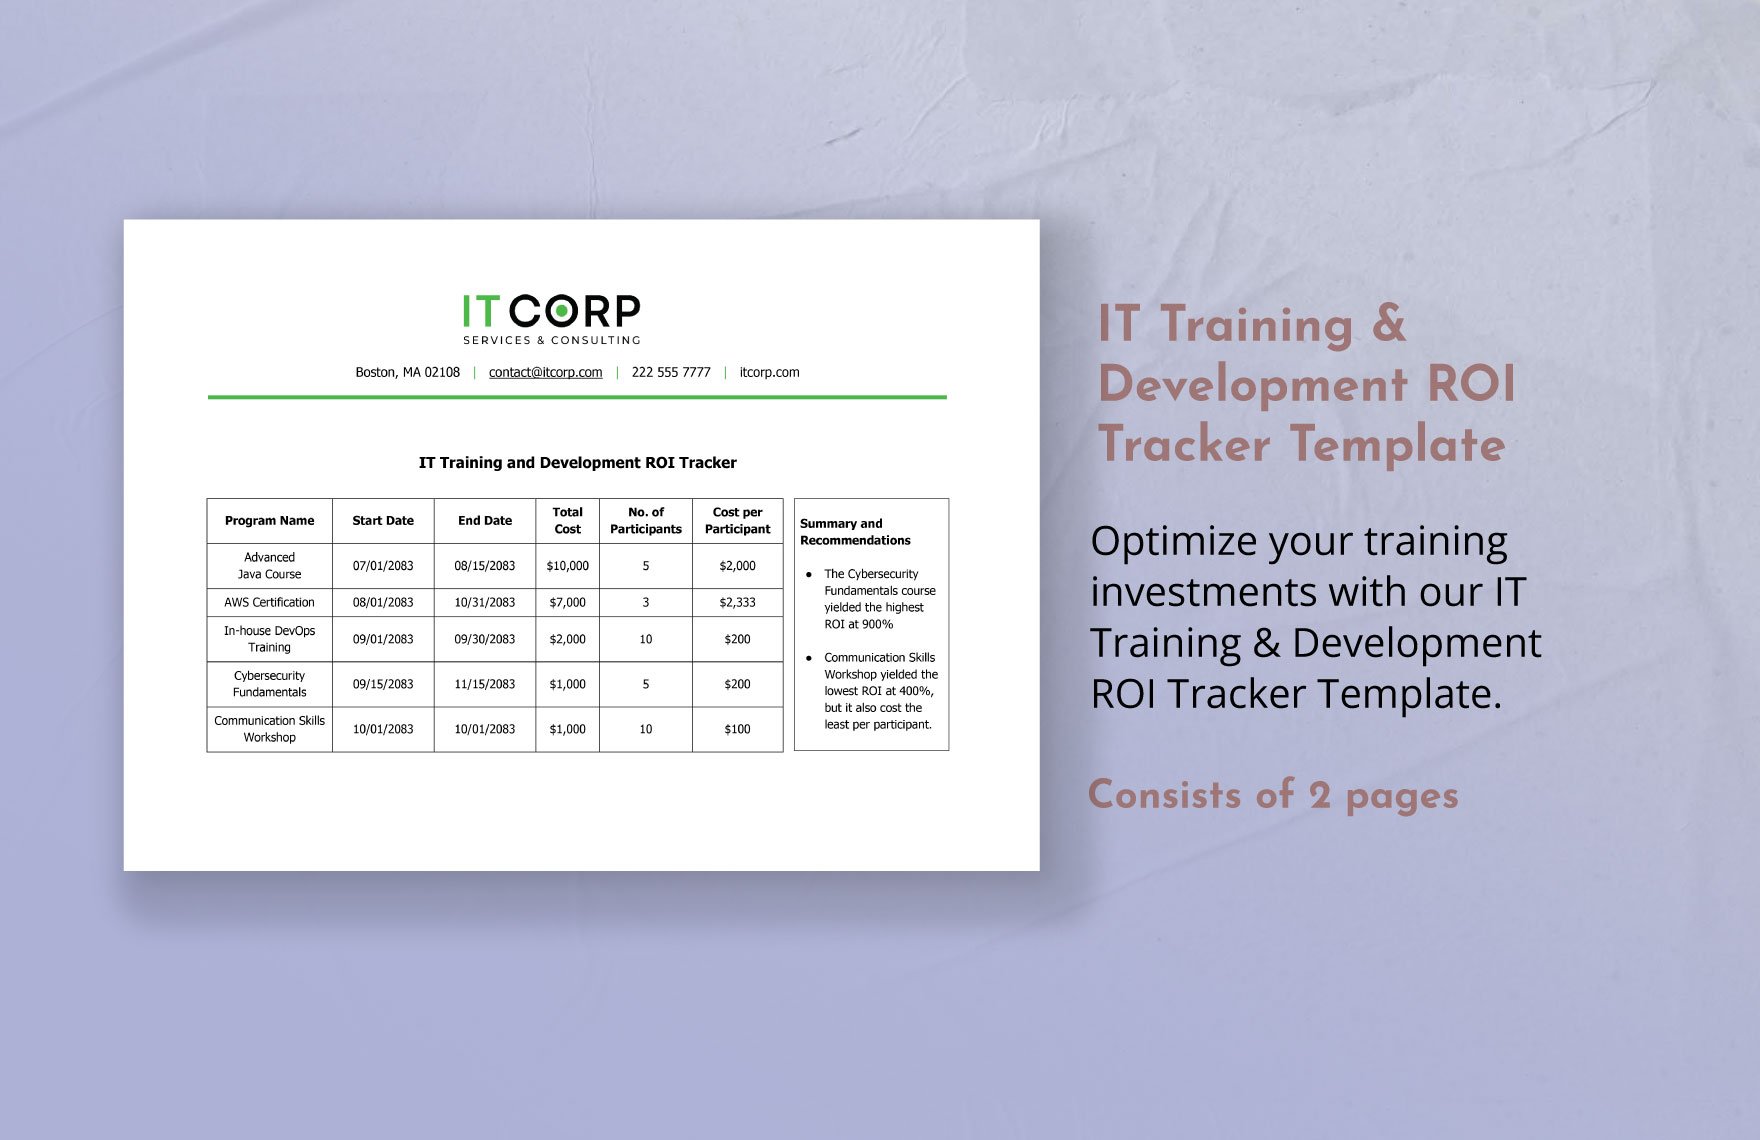 IT Training & Development ROI Tracker Template